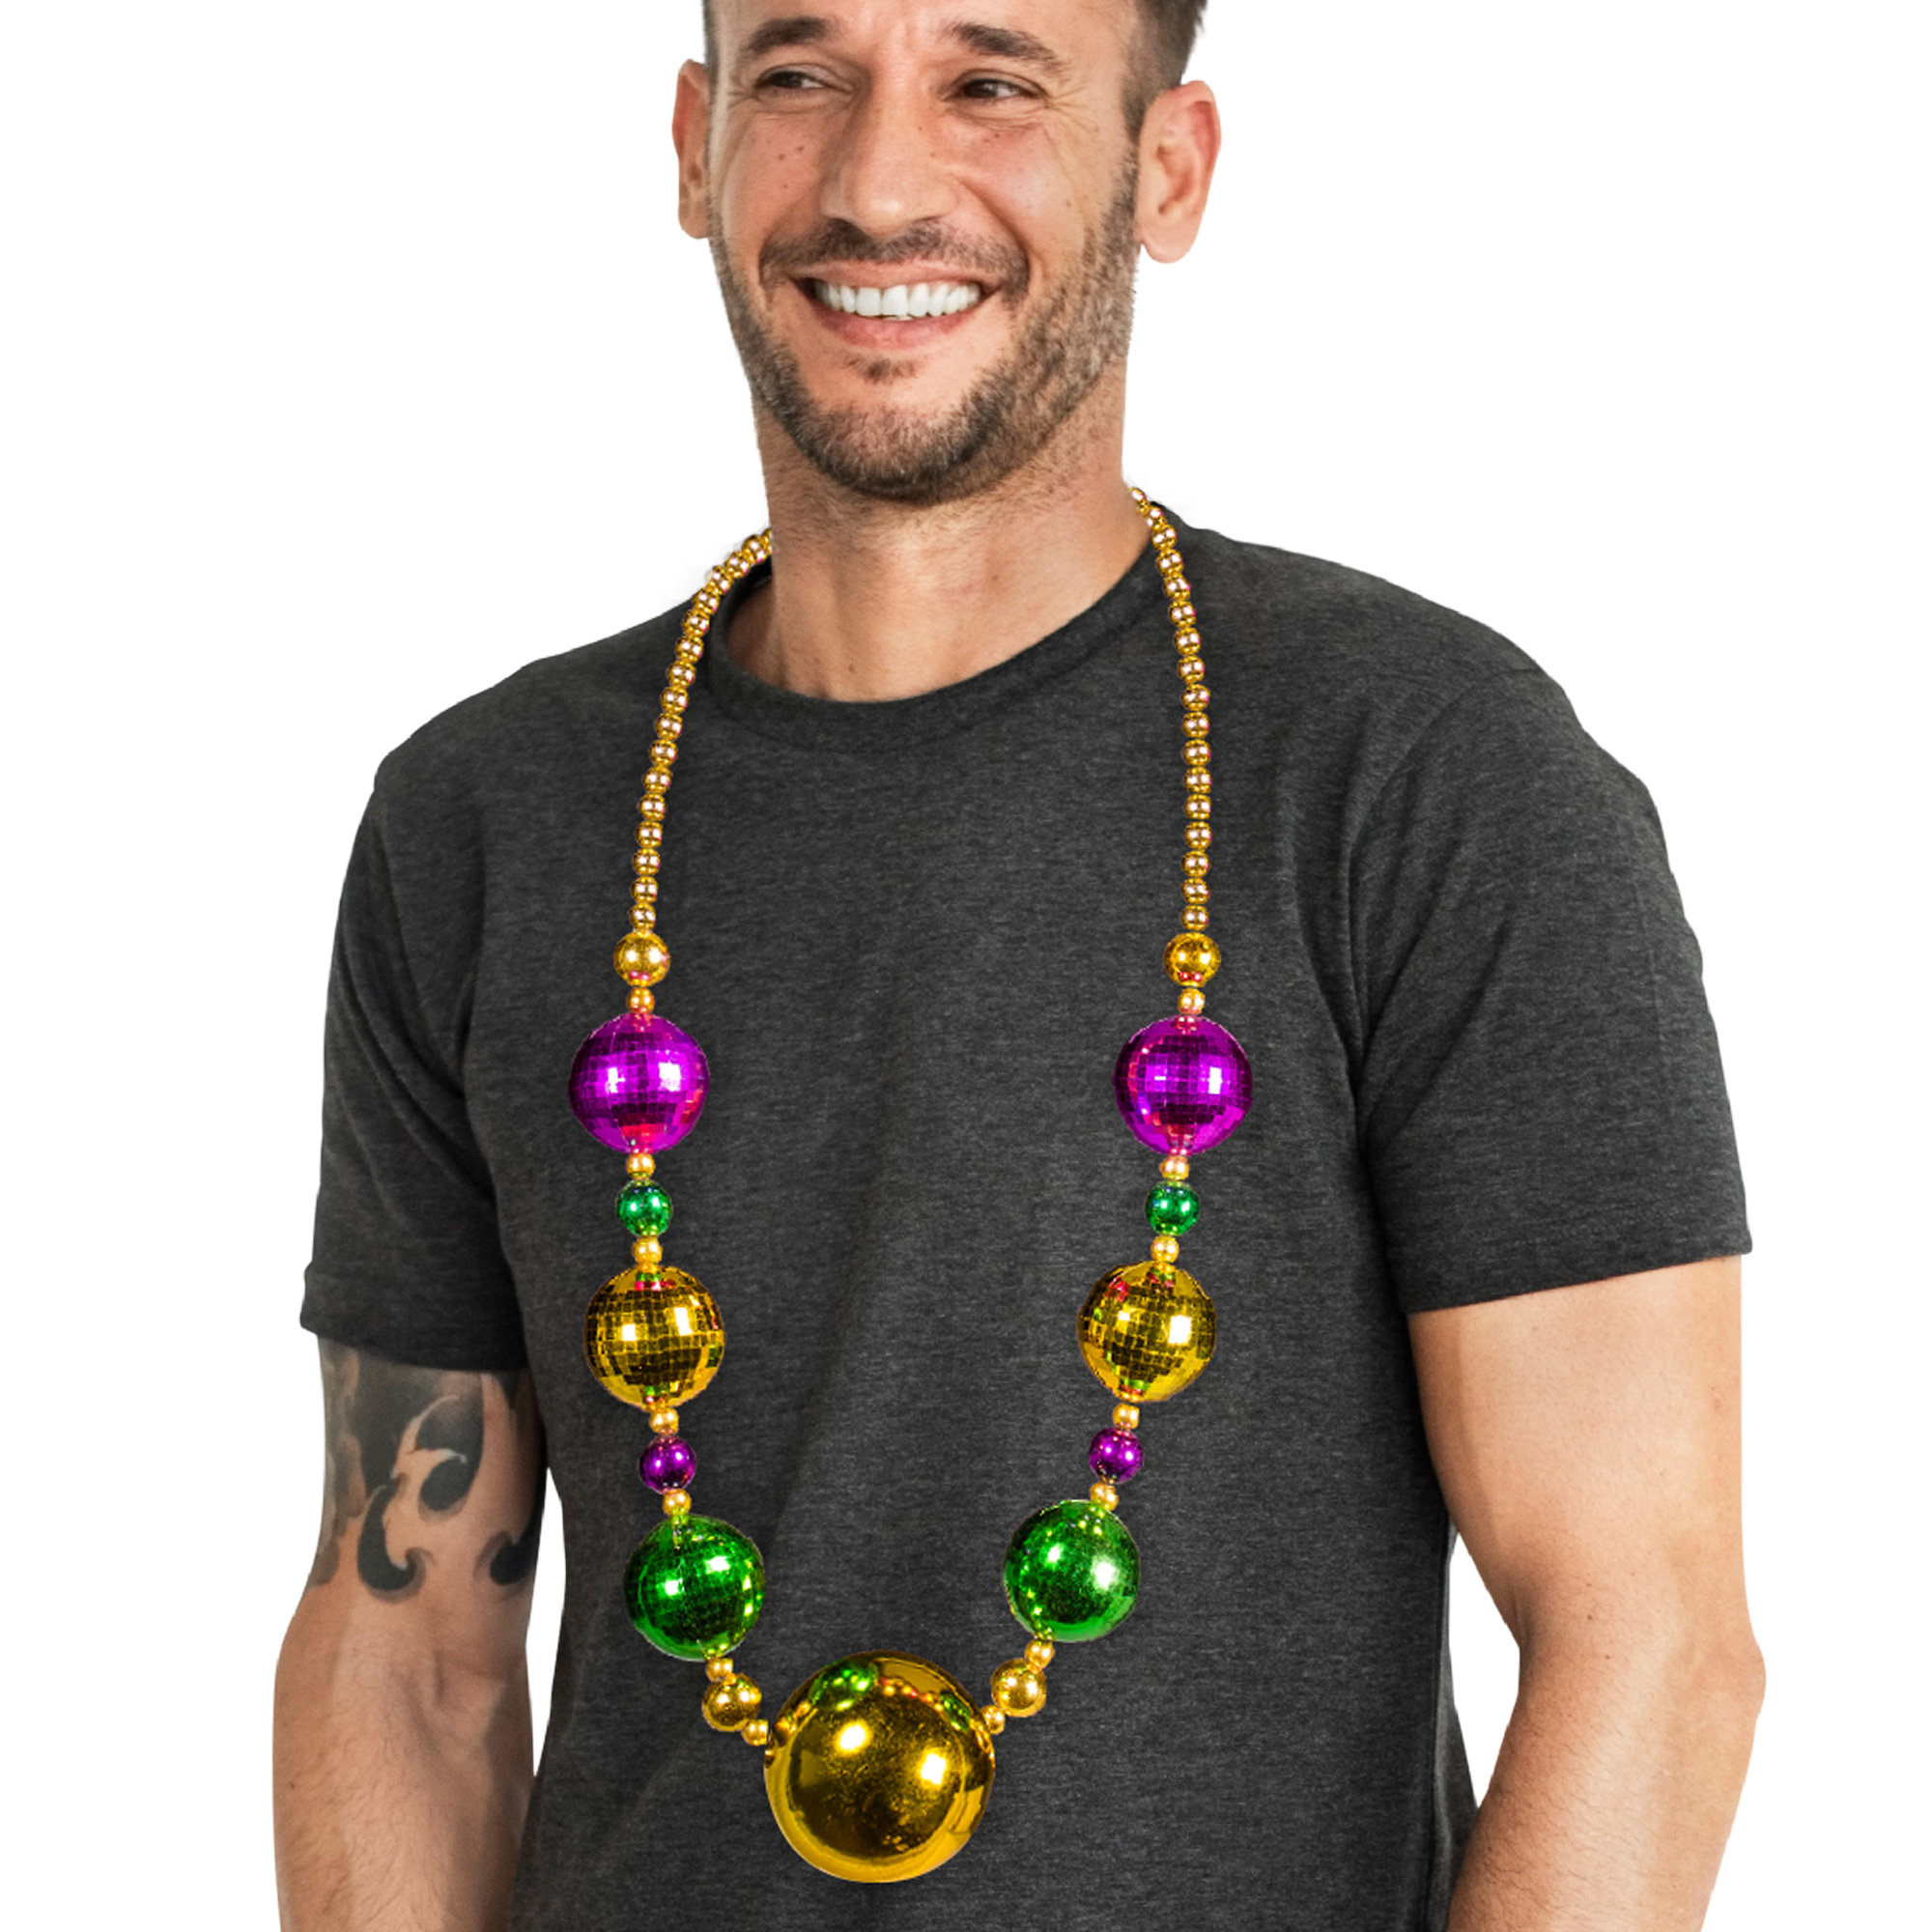 Mardi Gras Beads - Orange 6mm Bead Necklaces - Wholesale Novelty